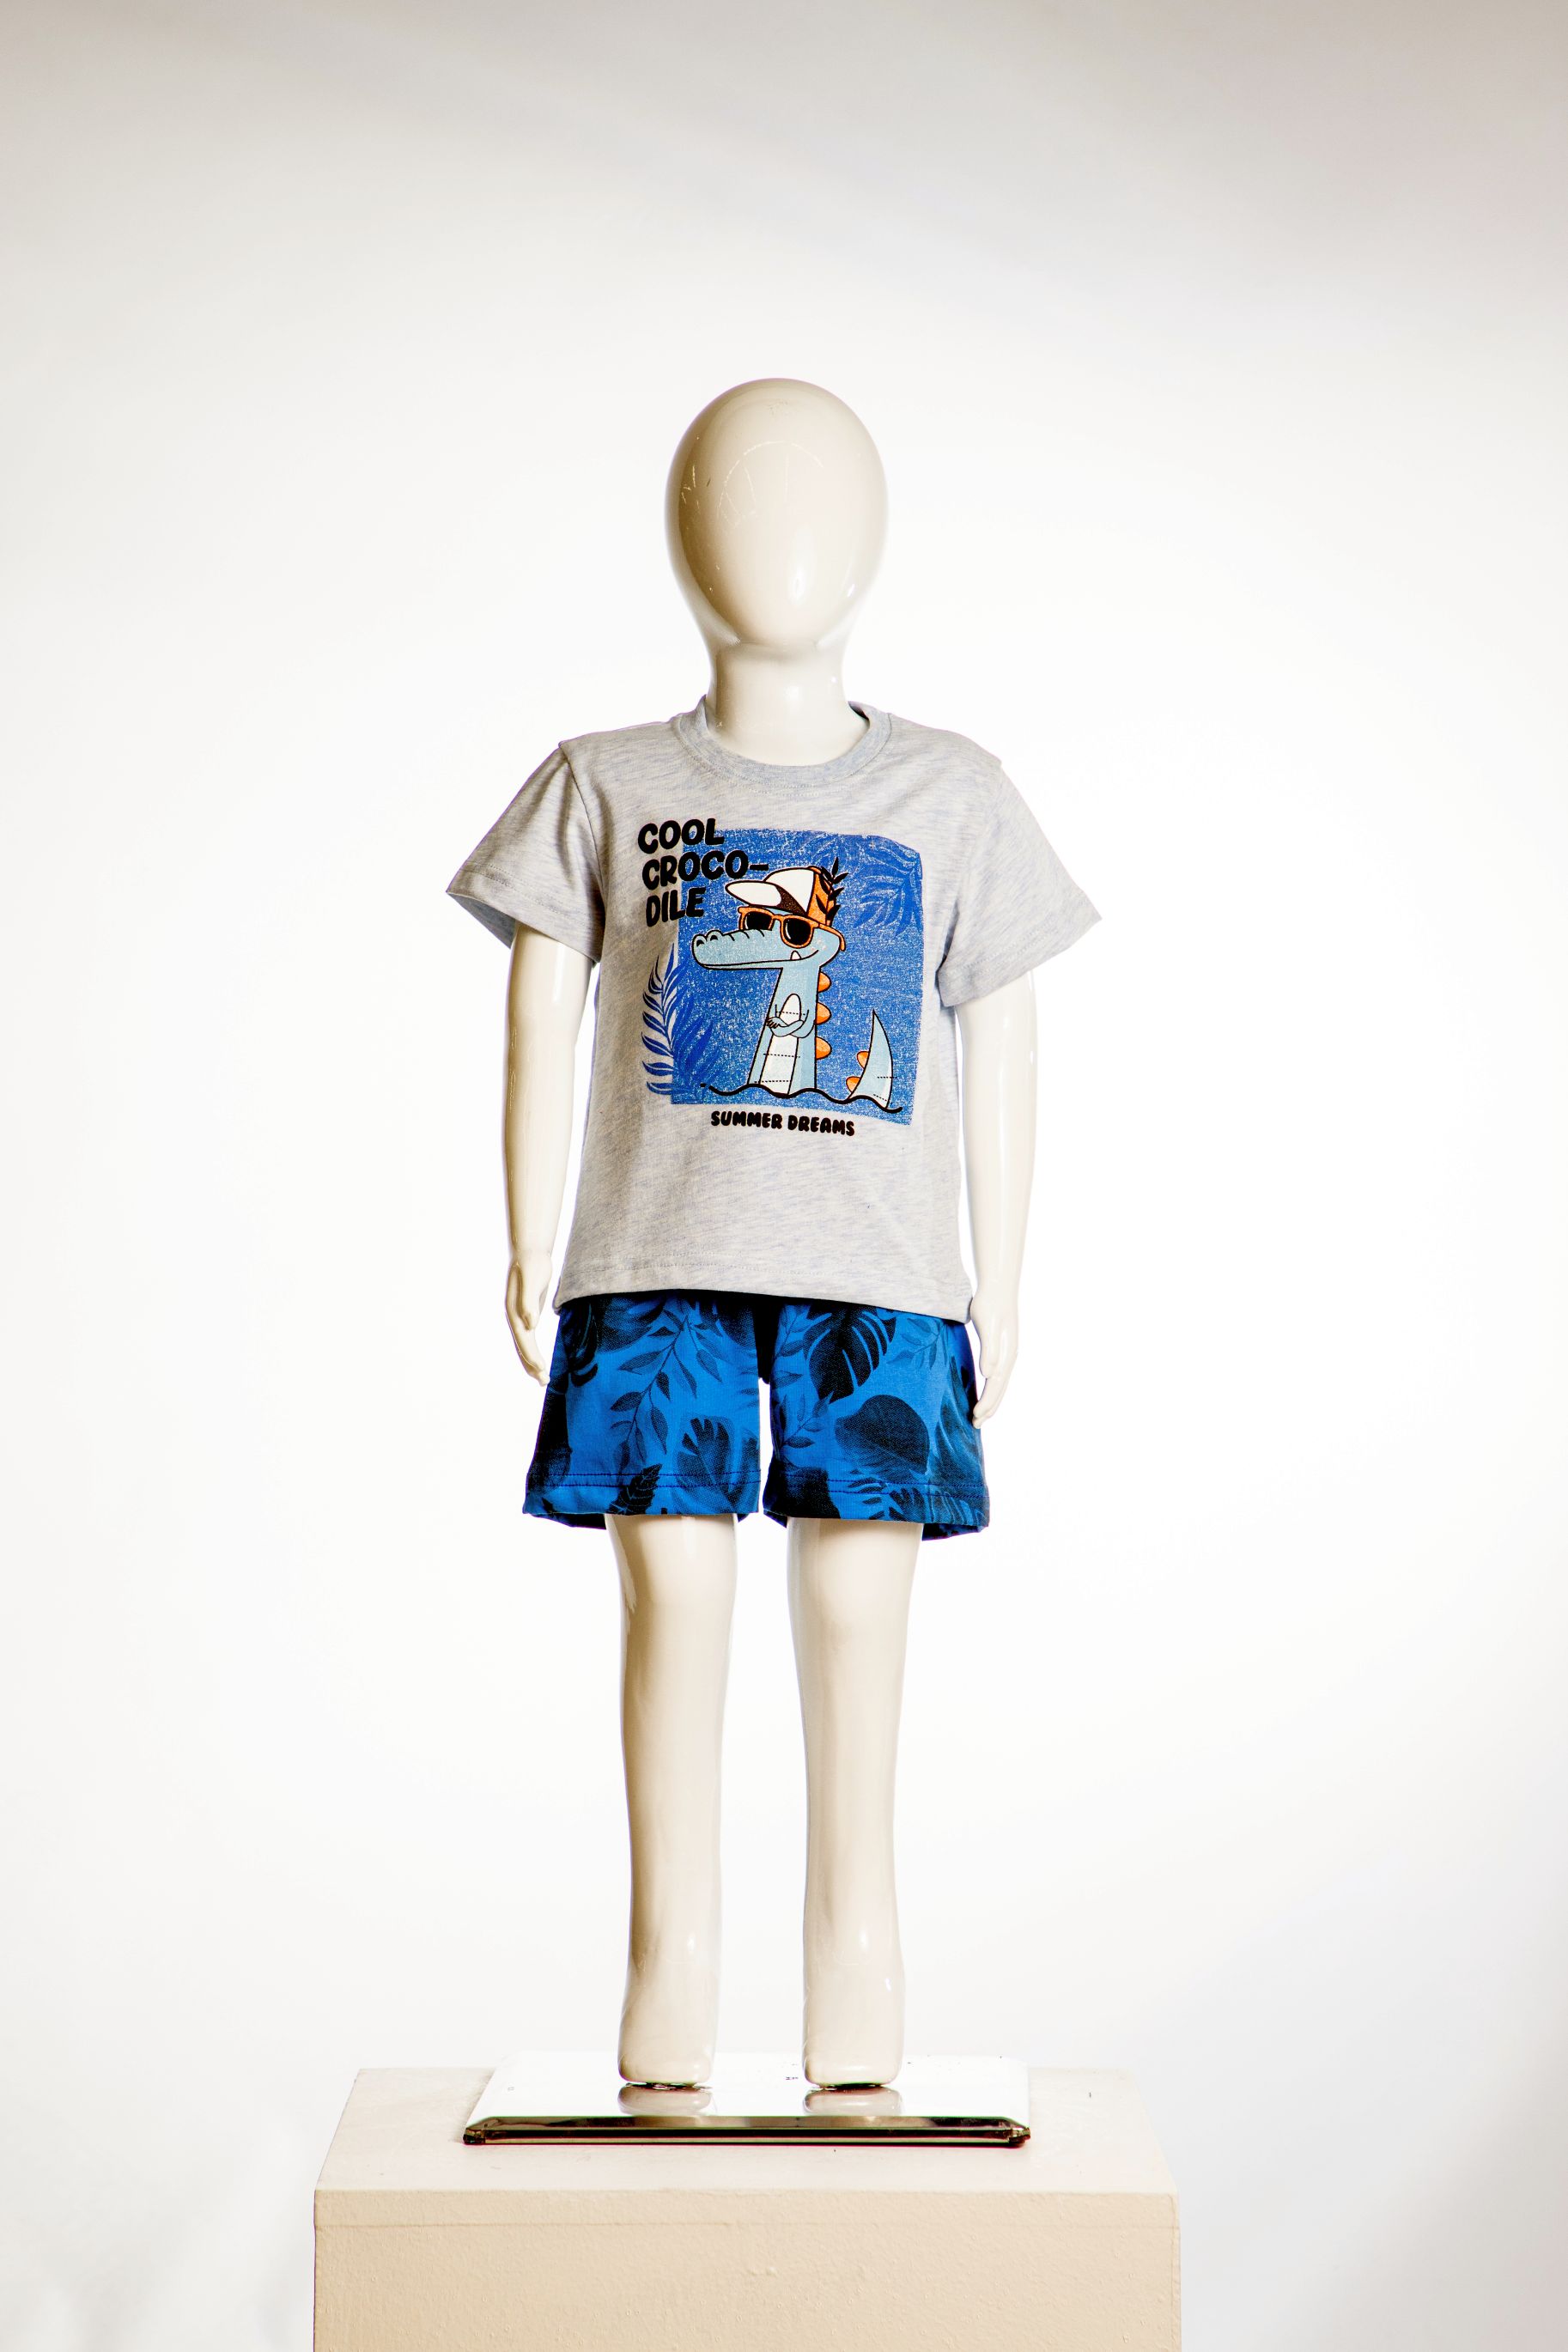 Chlapecké bavlněné pyžamo "CROCODILE" / modrá Barva: Modrá, Velikost: vel. 1 (78/86 cm)